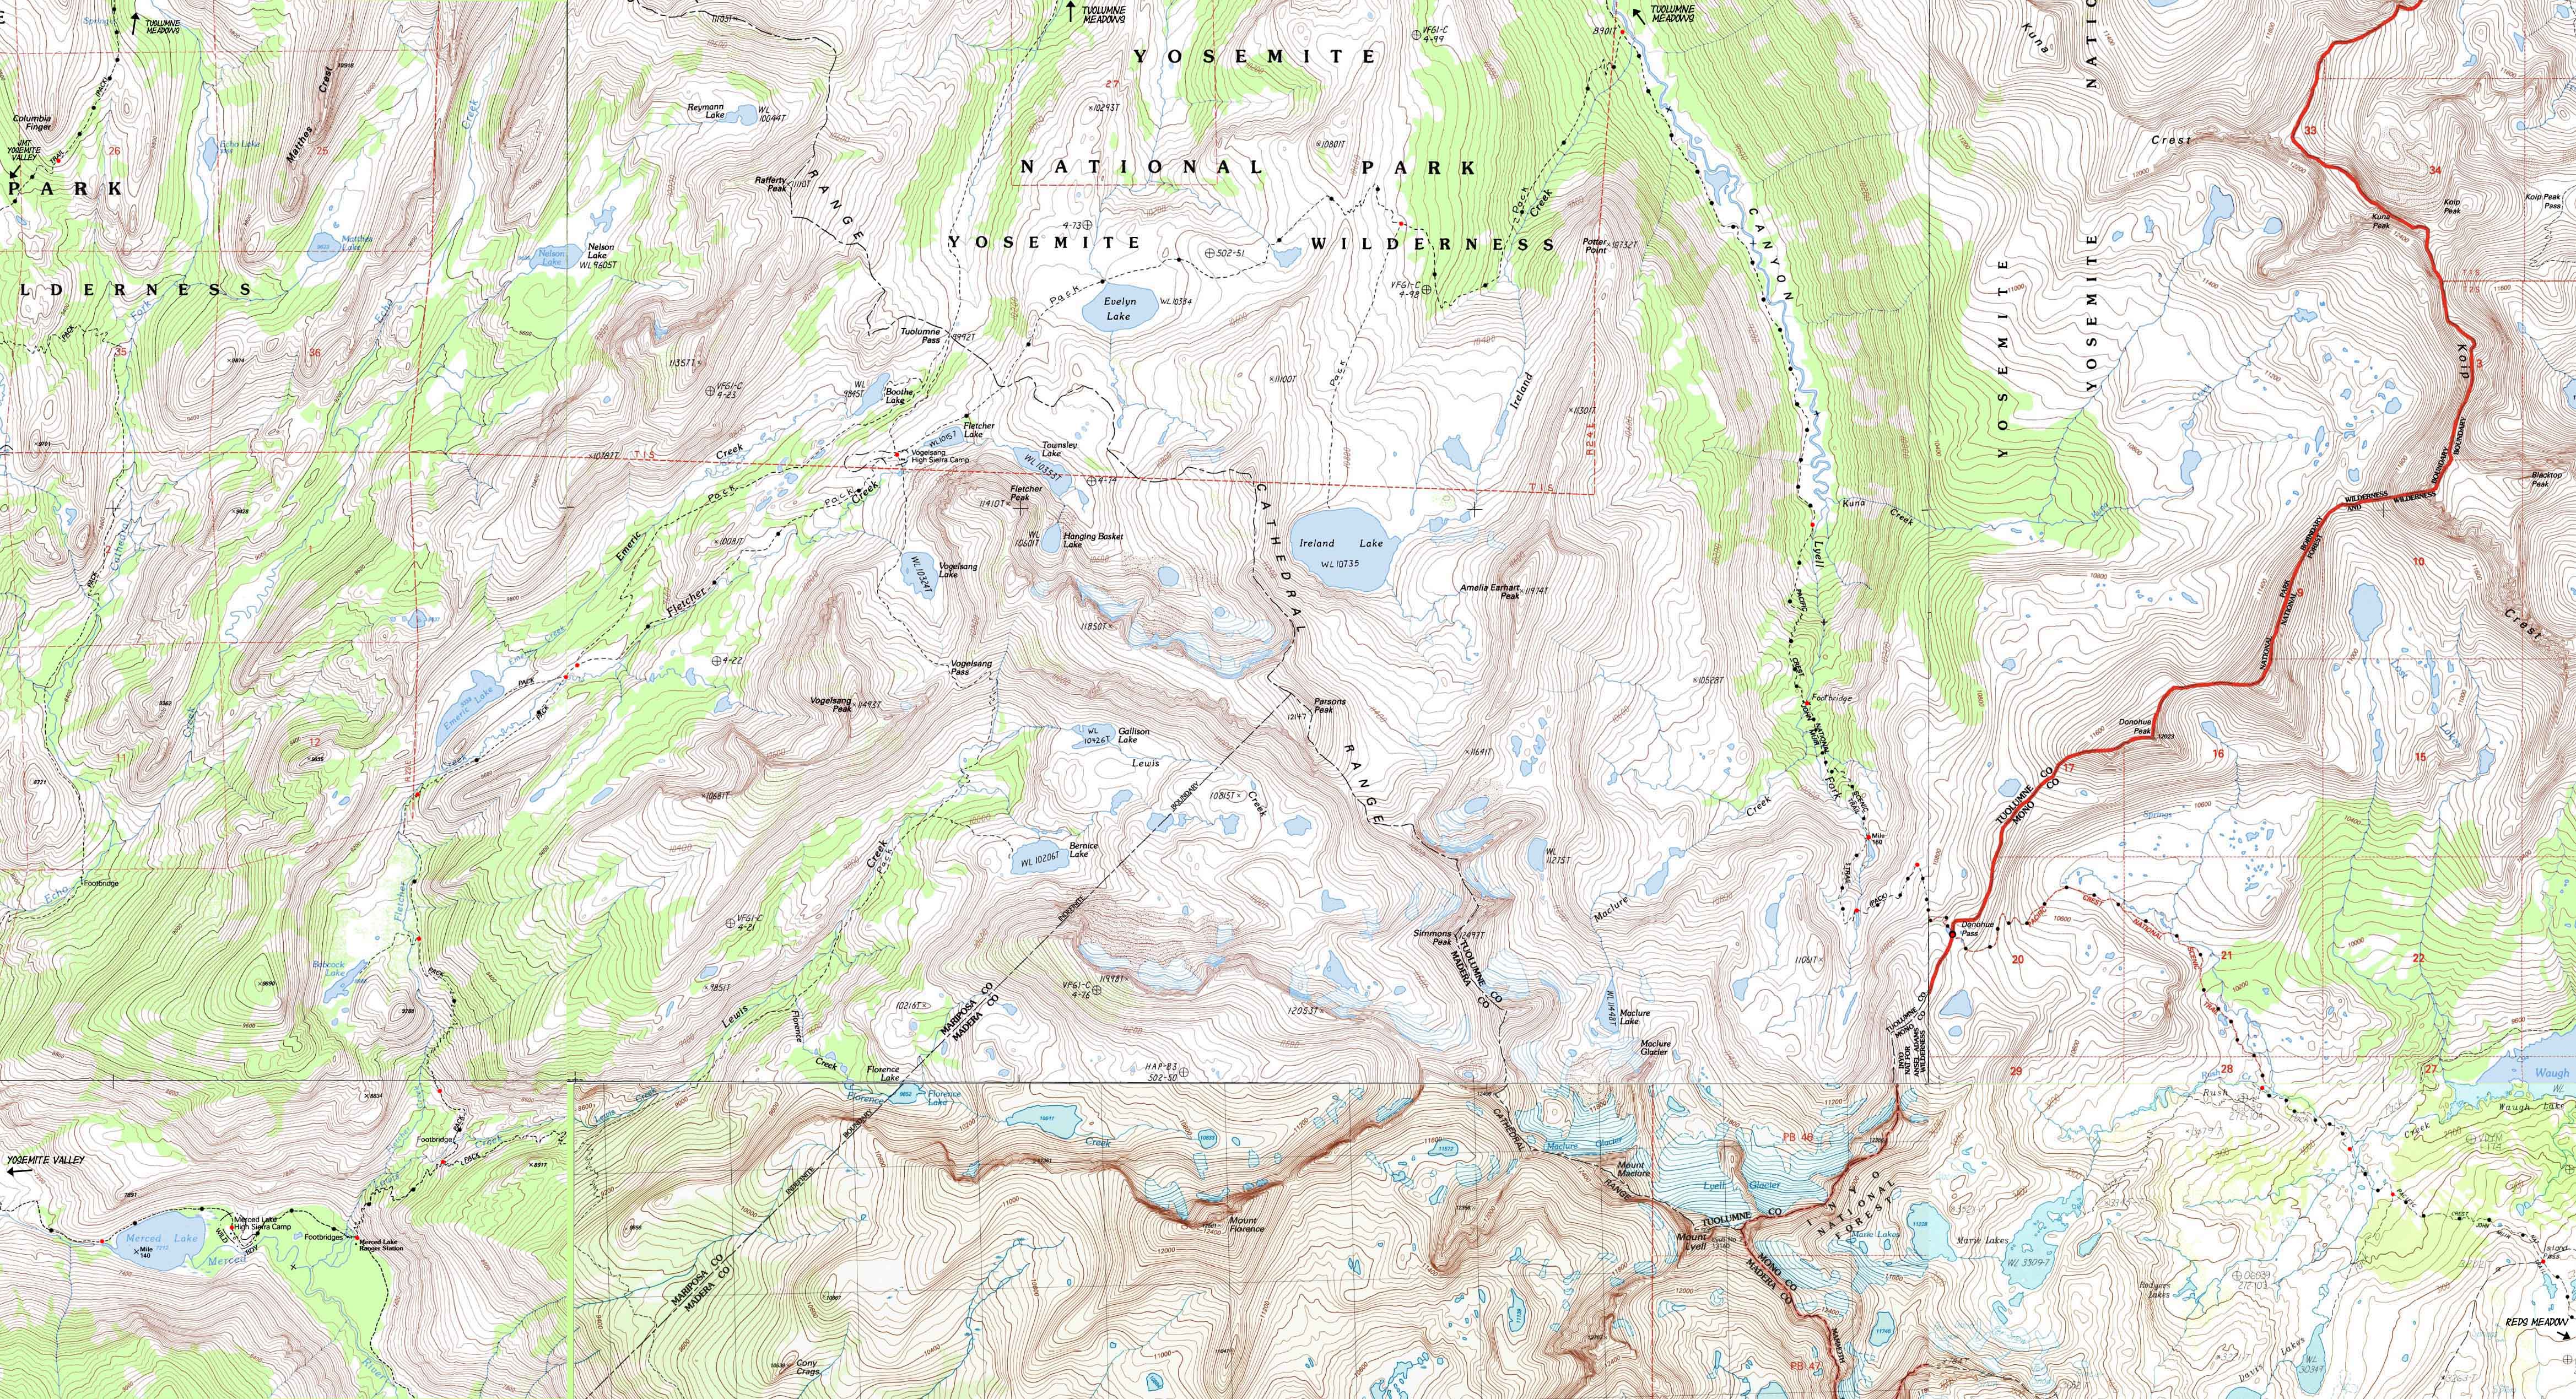 South Yosemite topo hiking map.